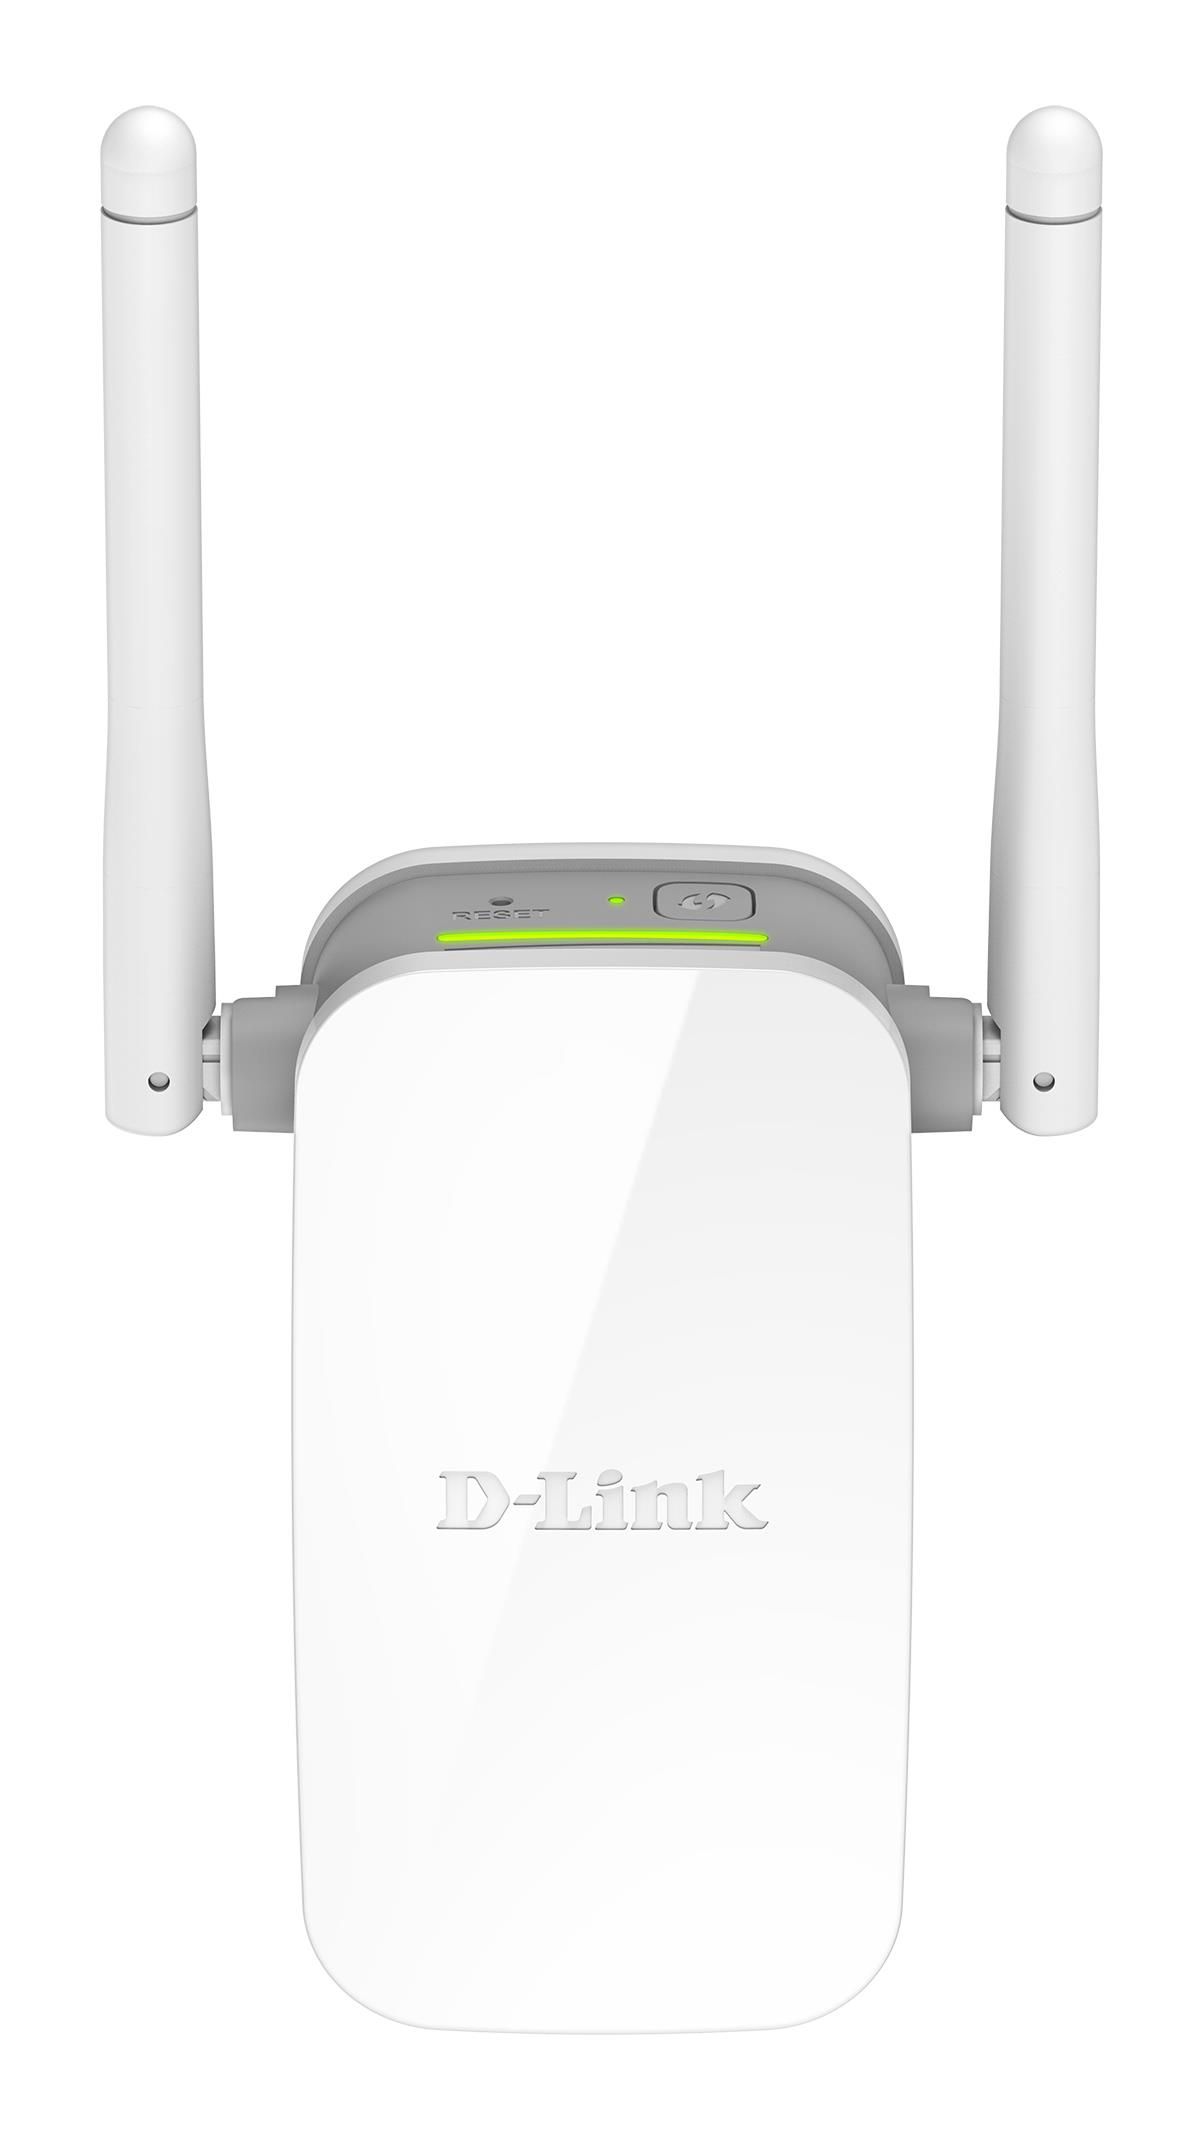 D-link Wireless Range Extender